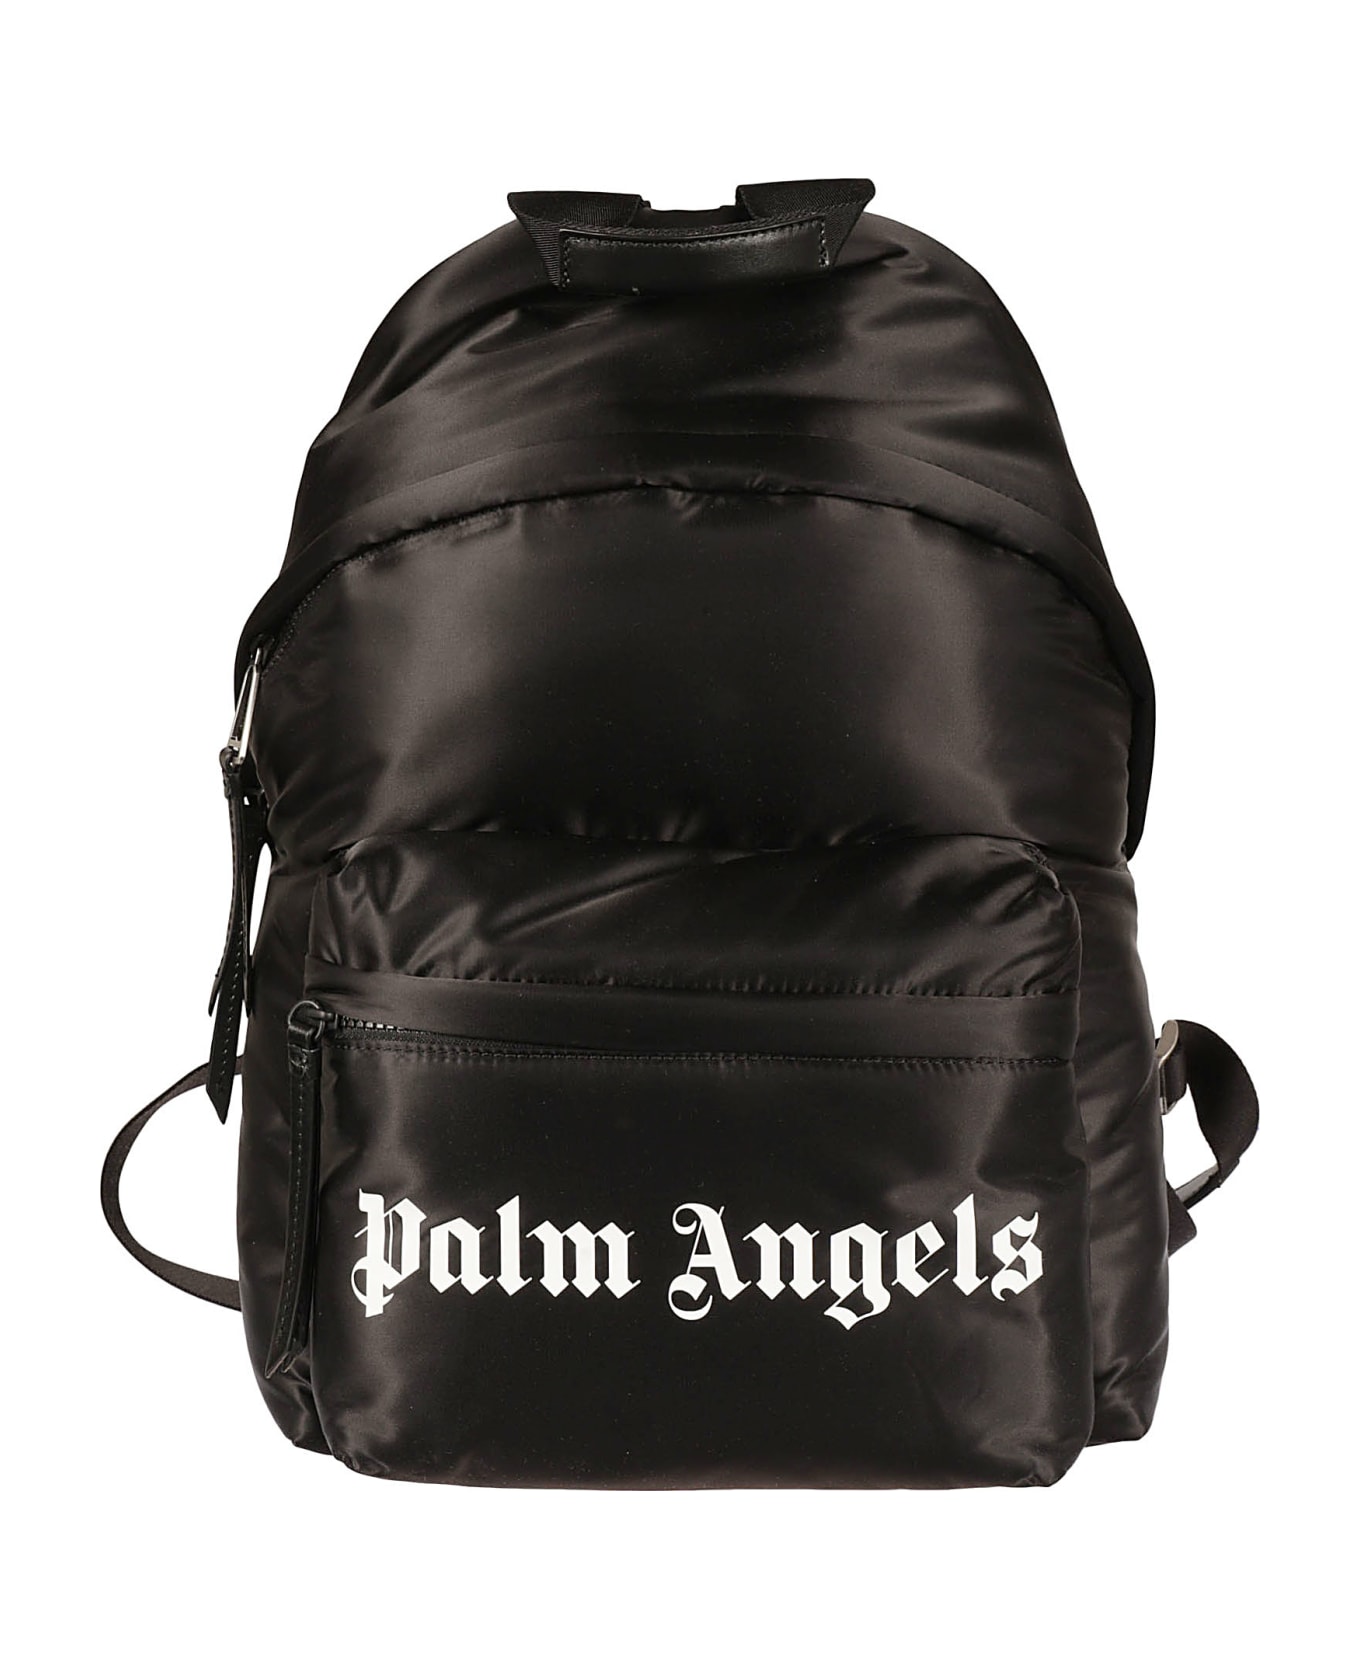 Palm Angels Logo Print Nylon Backpack - Black/White